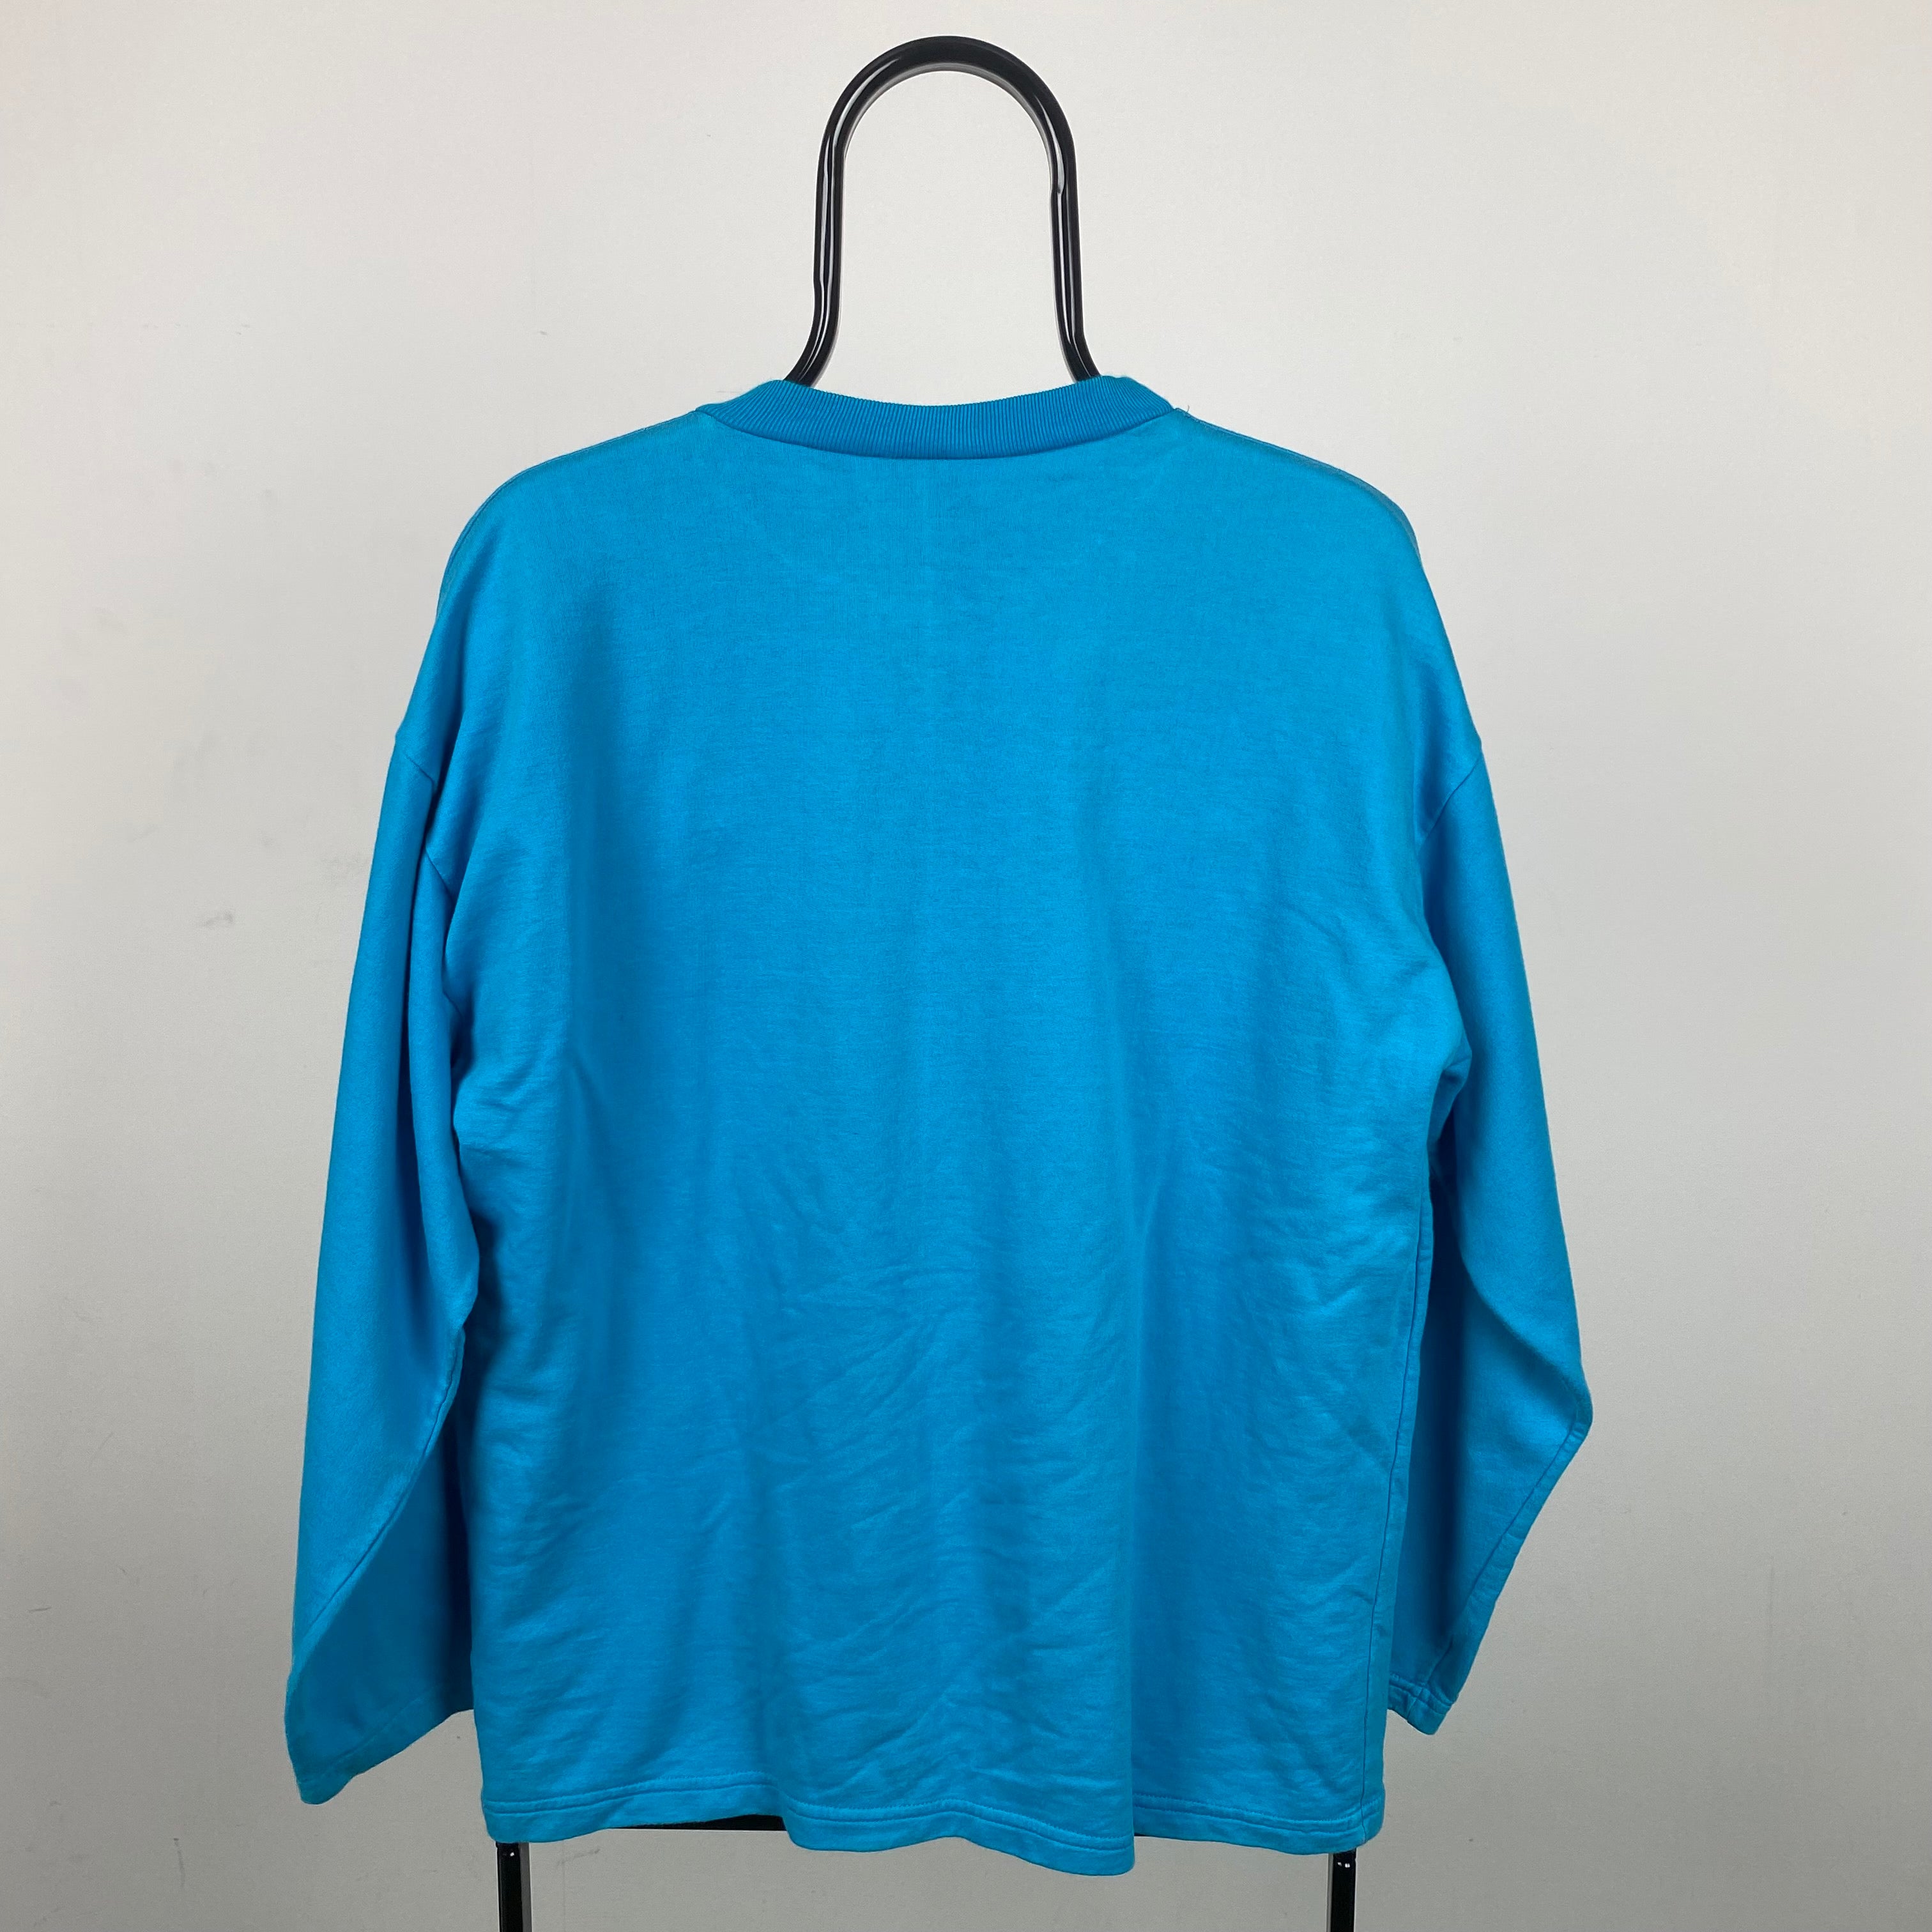 Retro Hamlet Pub Sweatshirt Blue Large